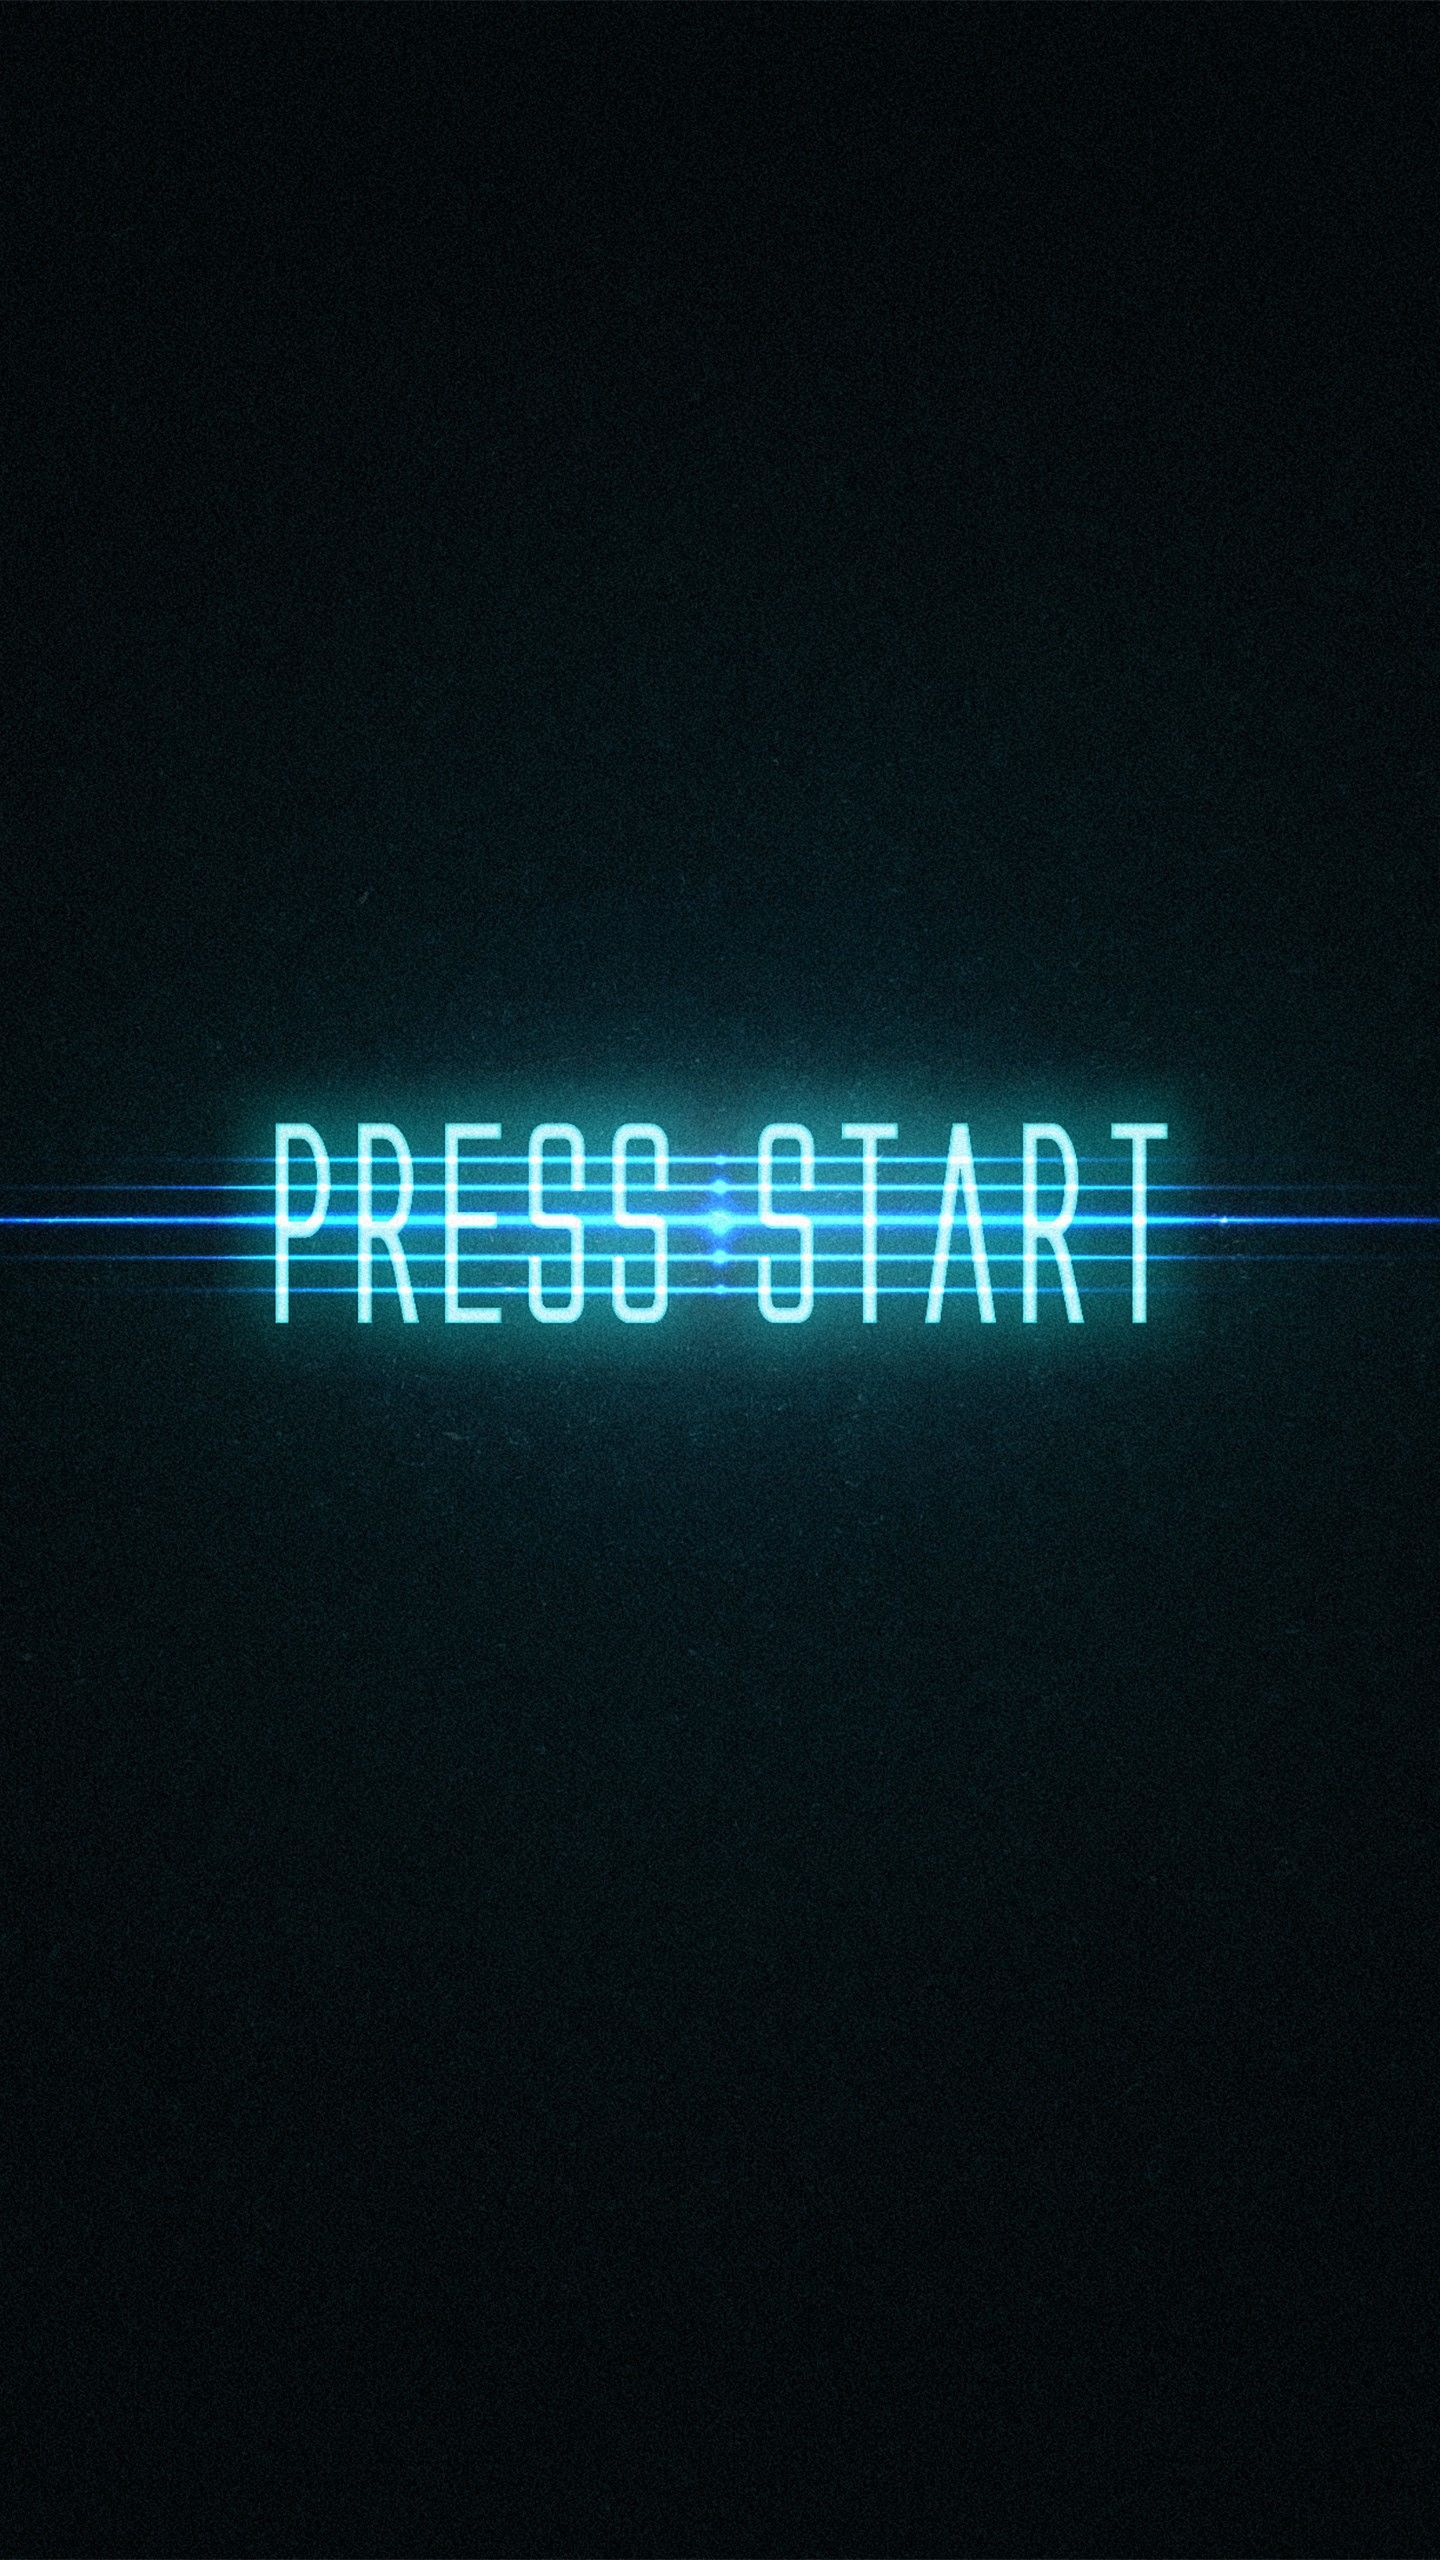 PRESS START Neon 4K Wallpaper